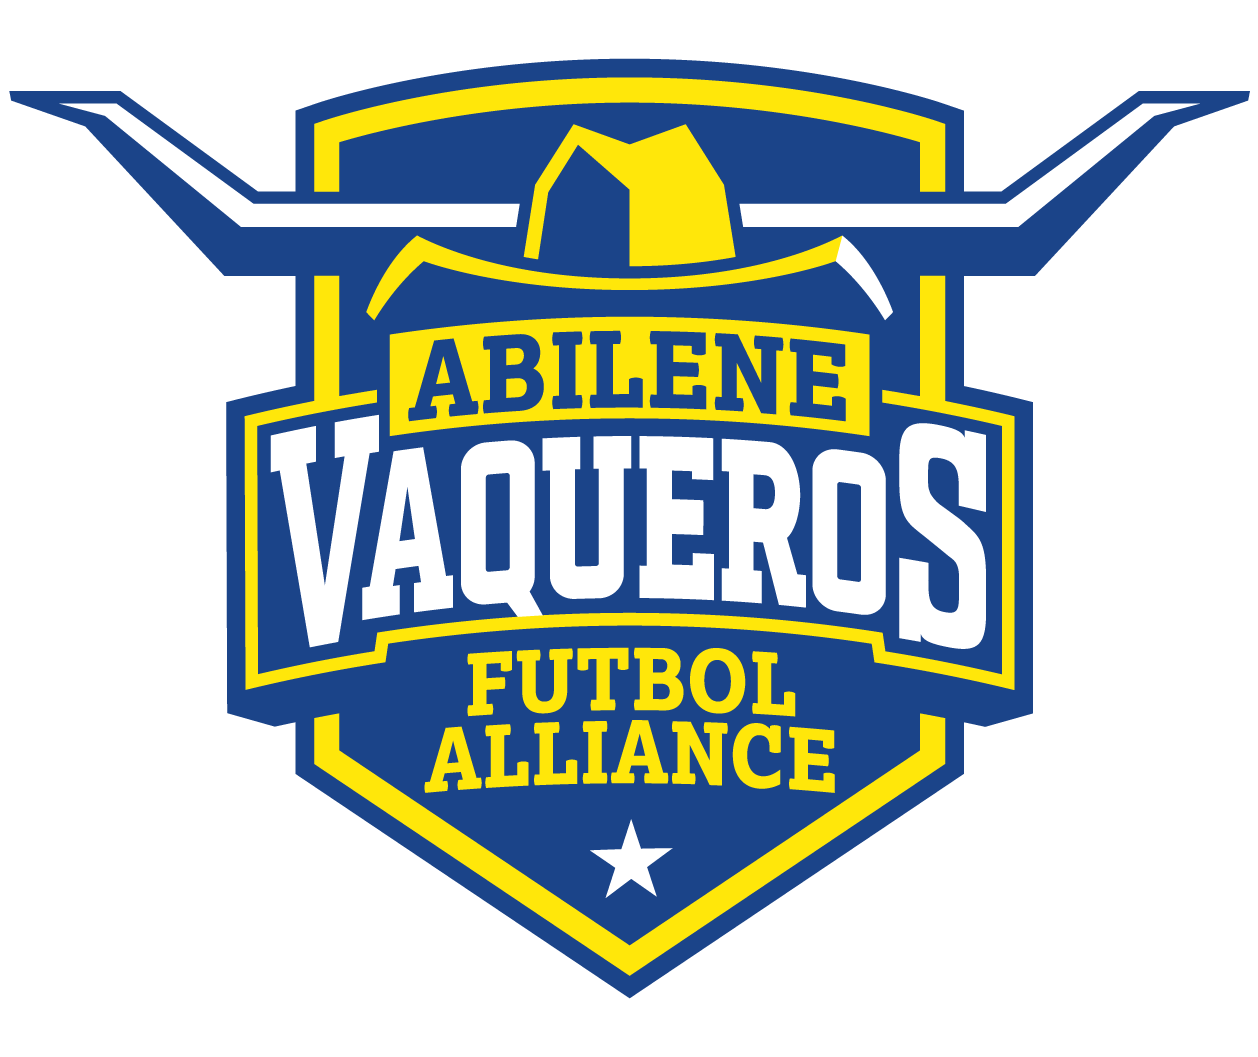 Abilene Vaqueros F.A. team badge